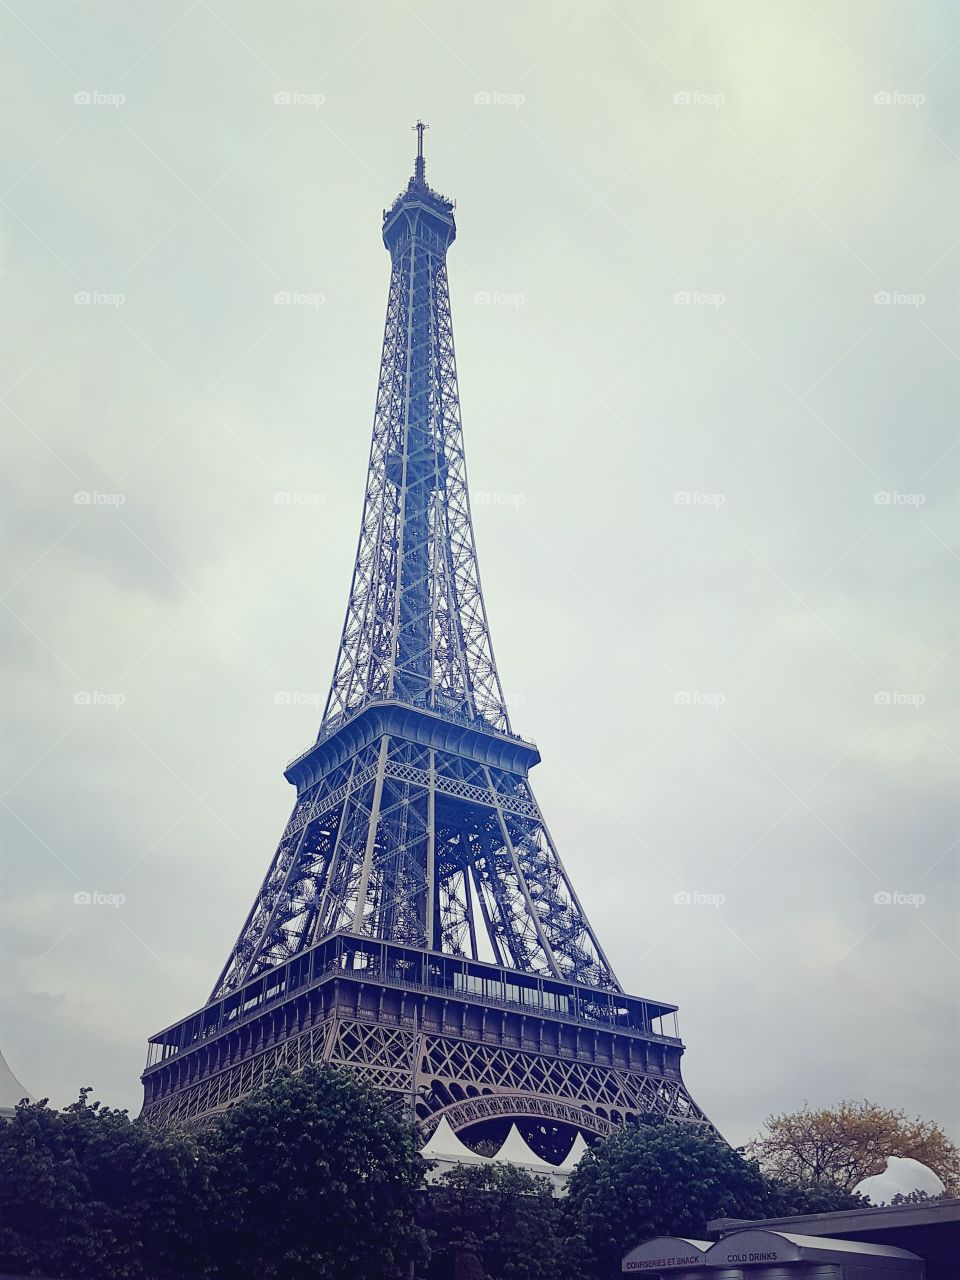 Eiffel Tower with a grey sky